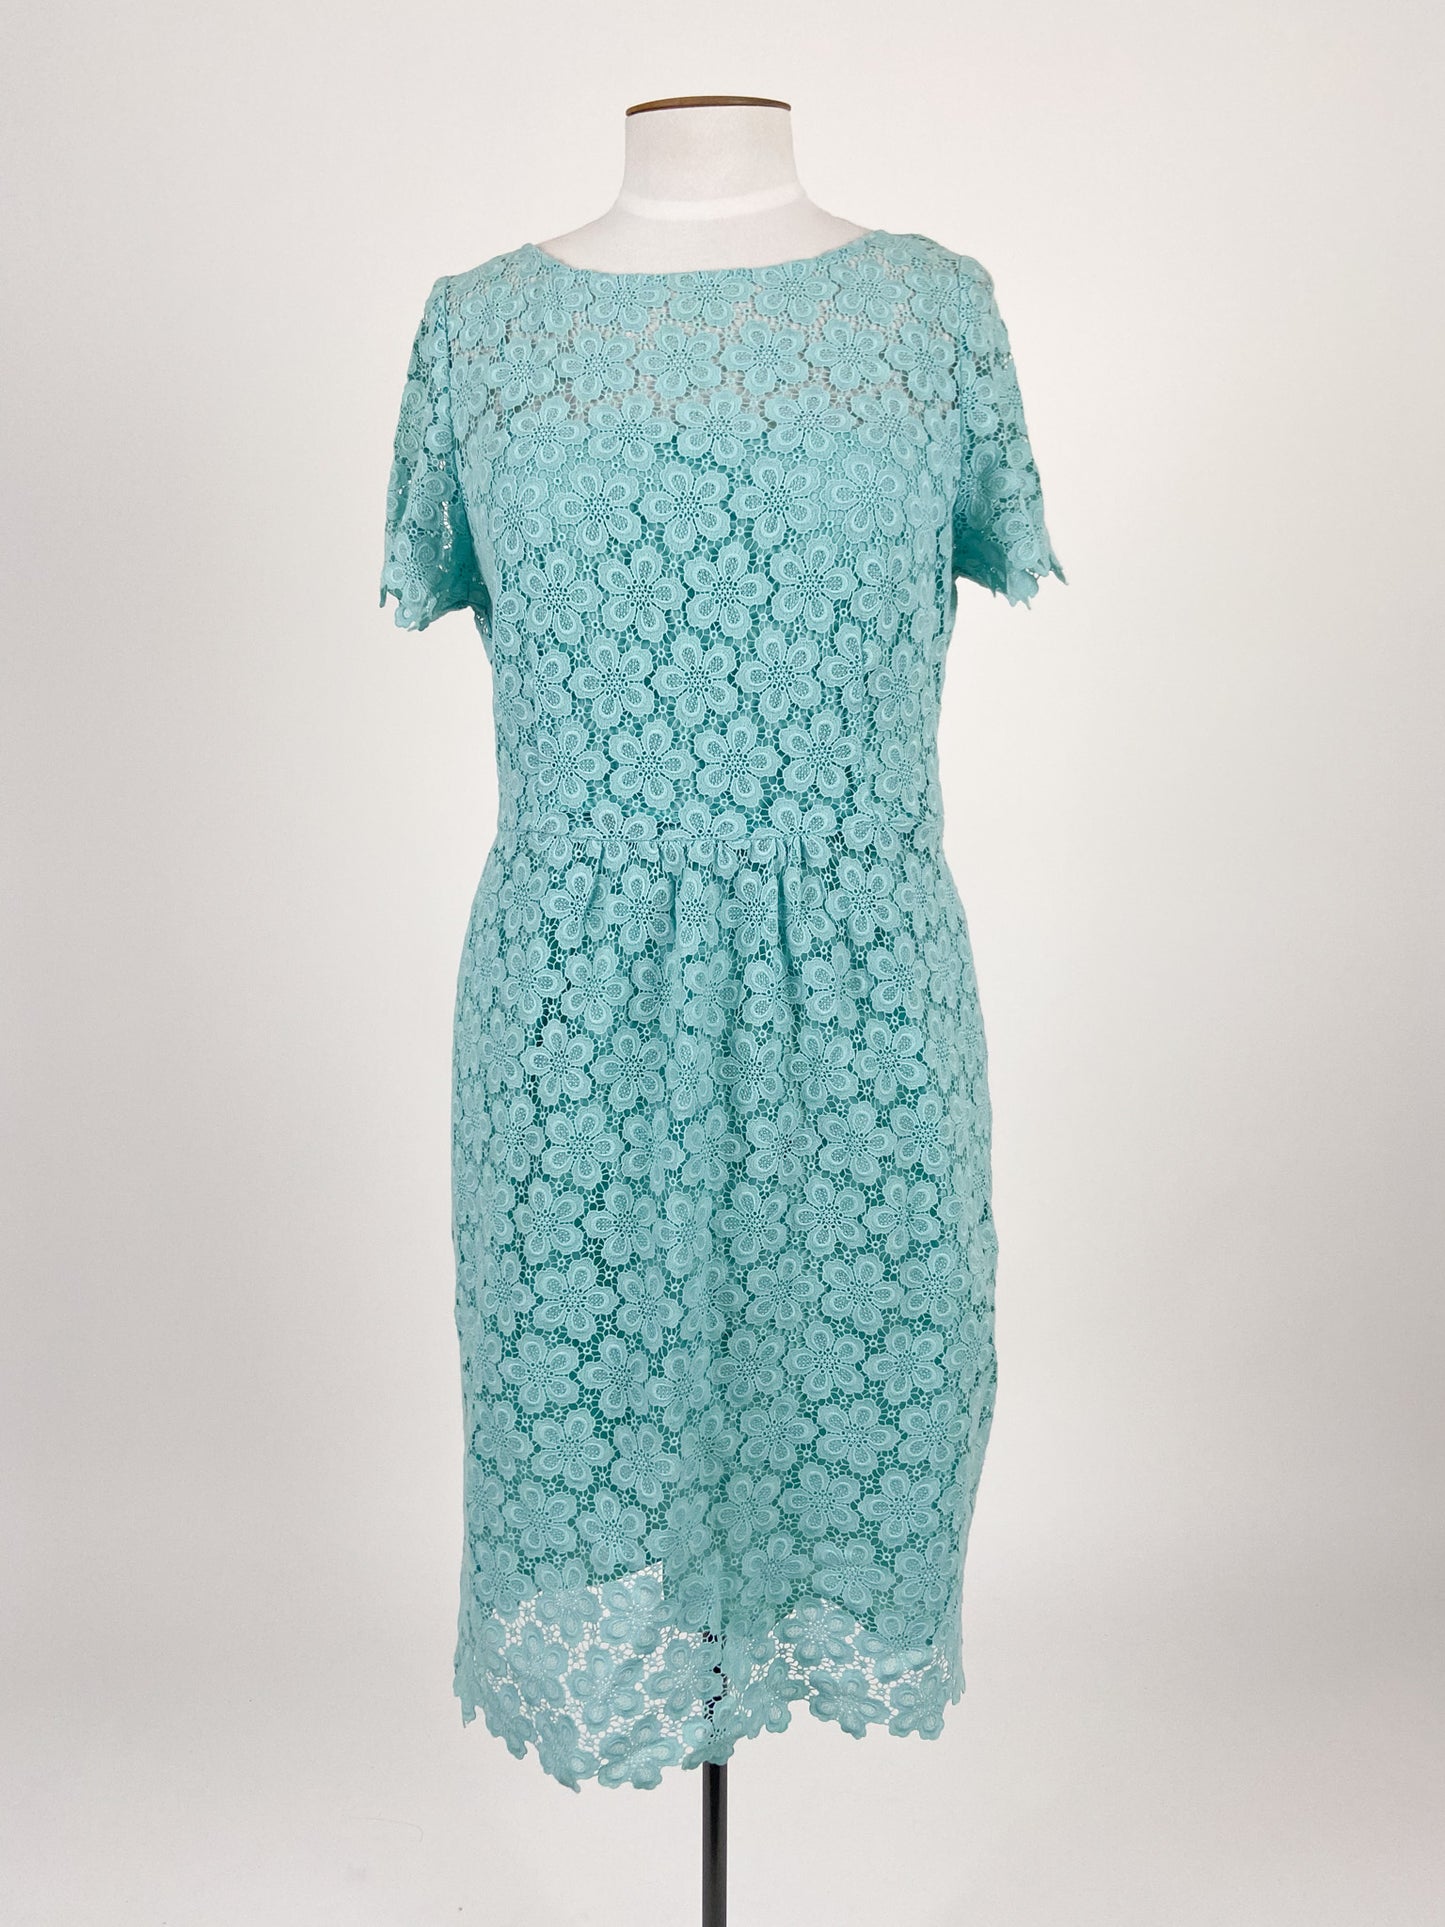 Perri Cutten | Blue Cocktail/Formal Dress | Size 14